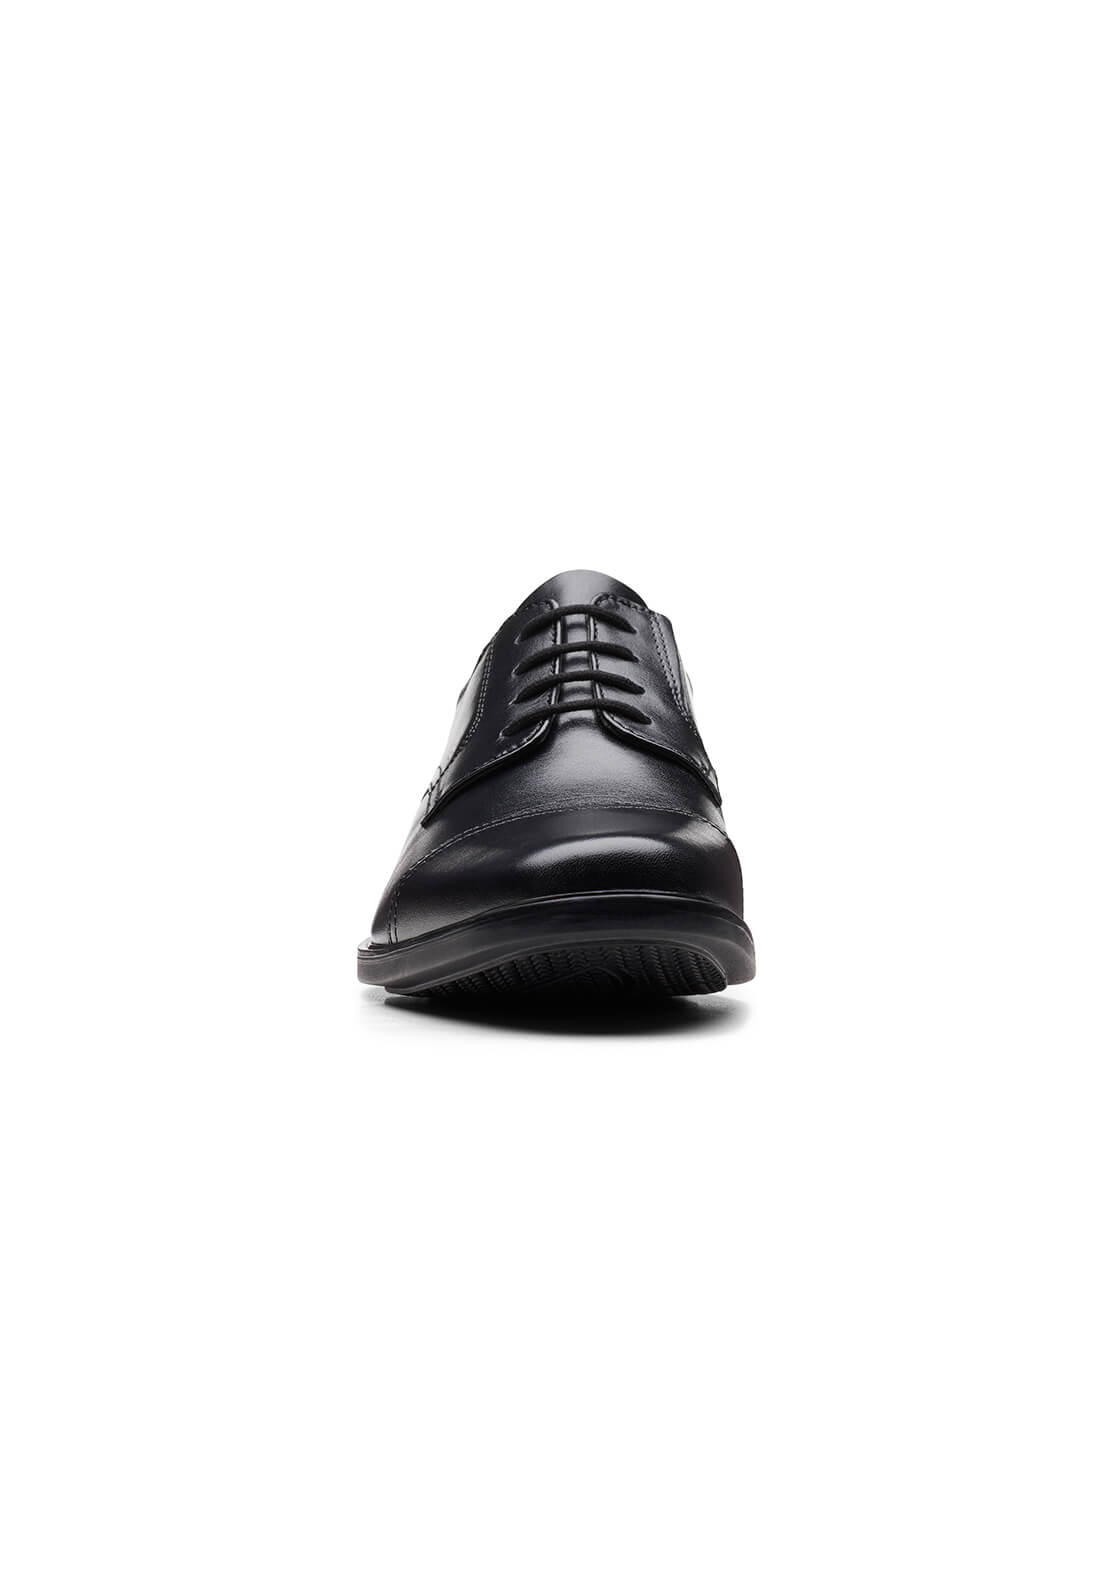 Clarks Howard Cap Formal Shoe - Black 5 Shaws Department Stores